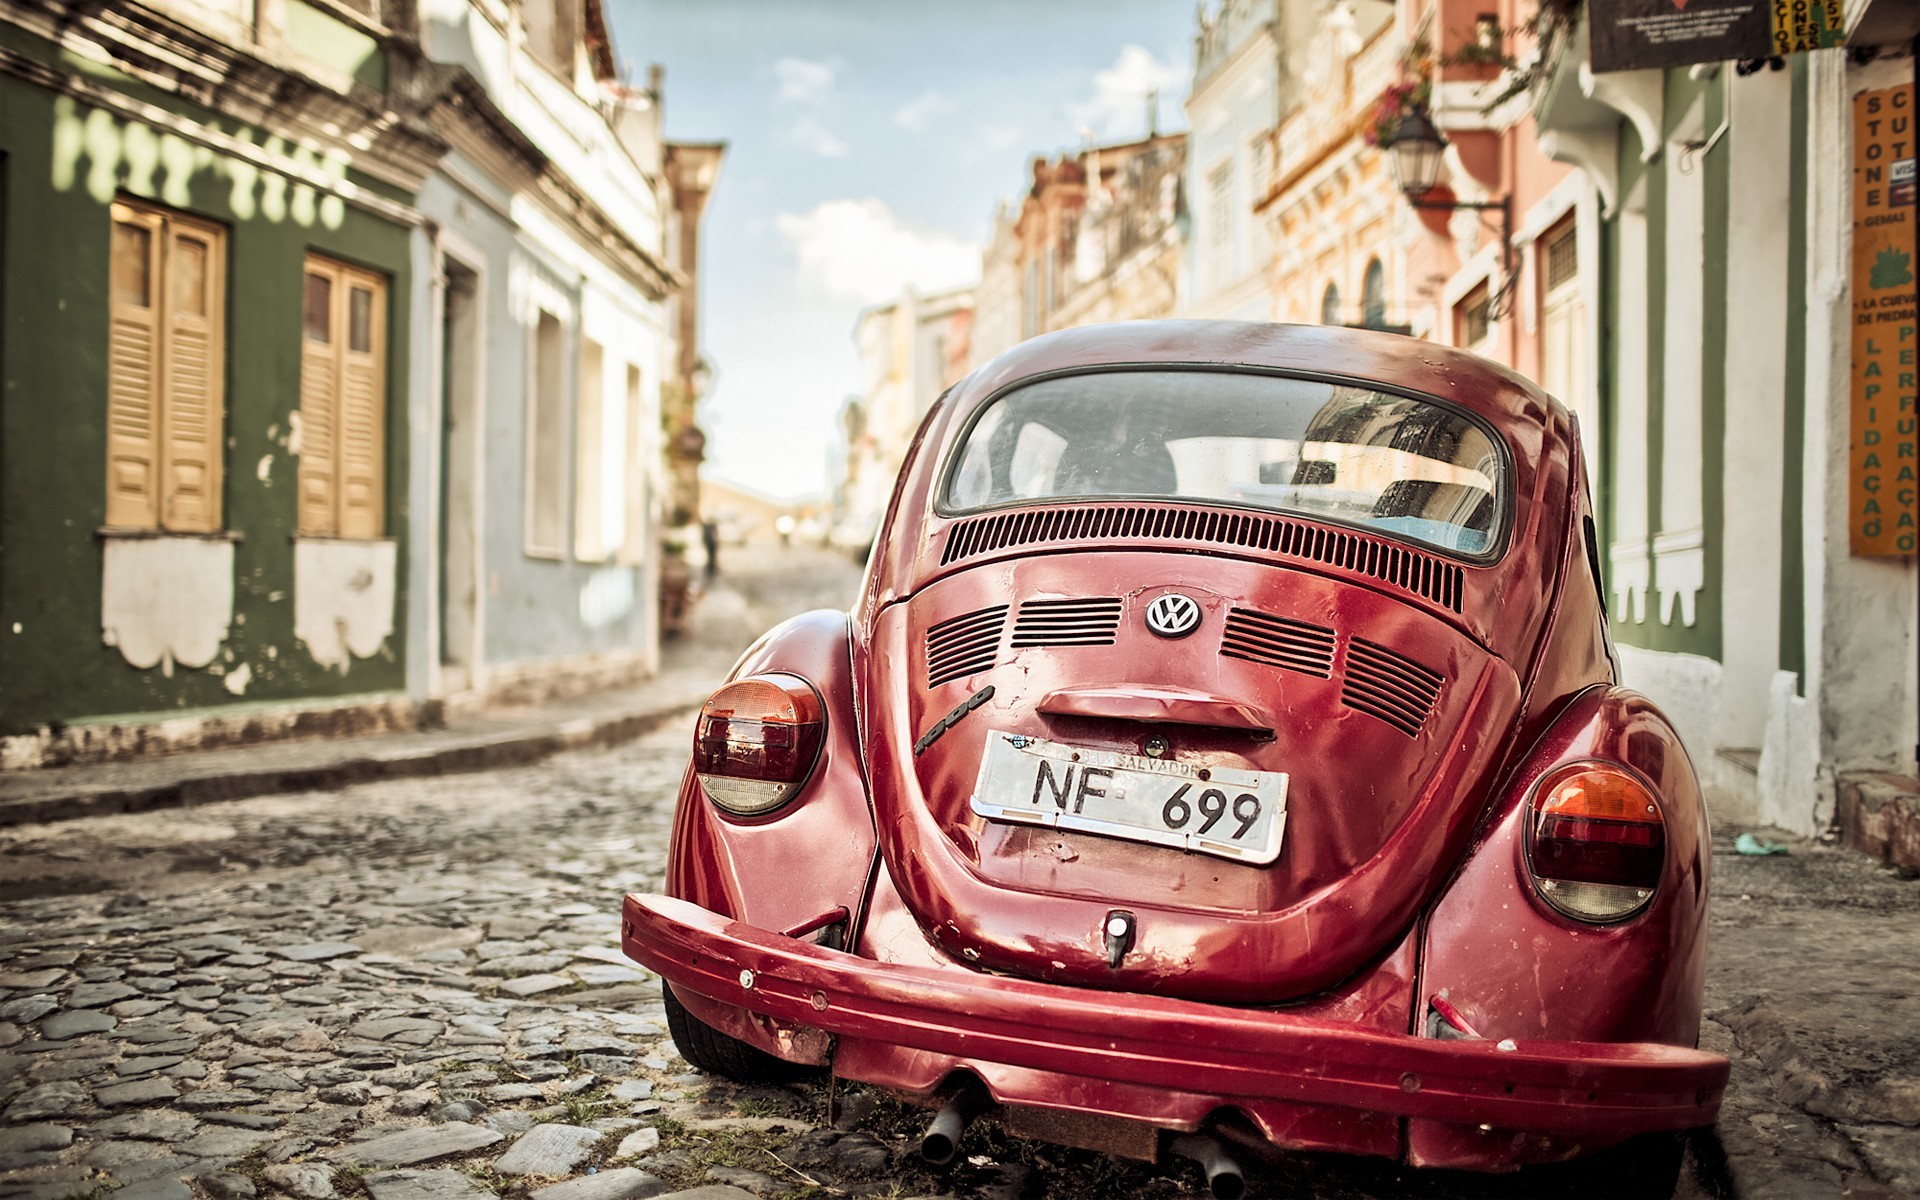 Car Volkswagen Beetle Wallpapers Hd Desktop And Mobile Backgrounds